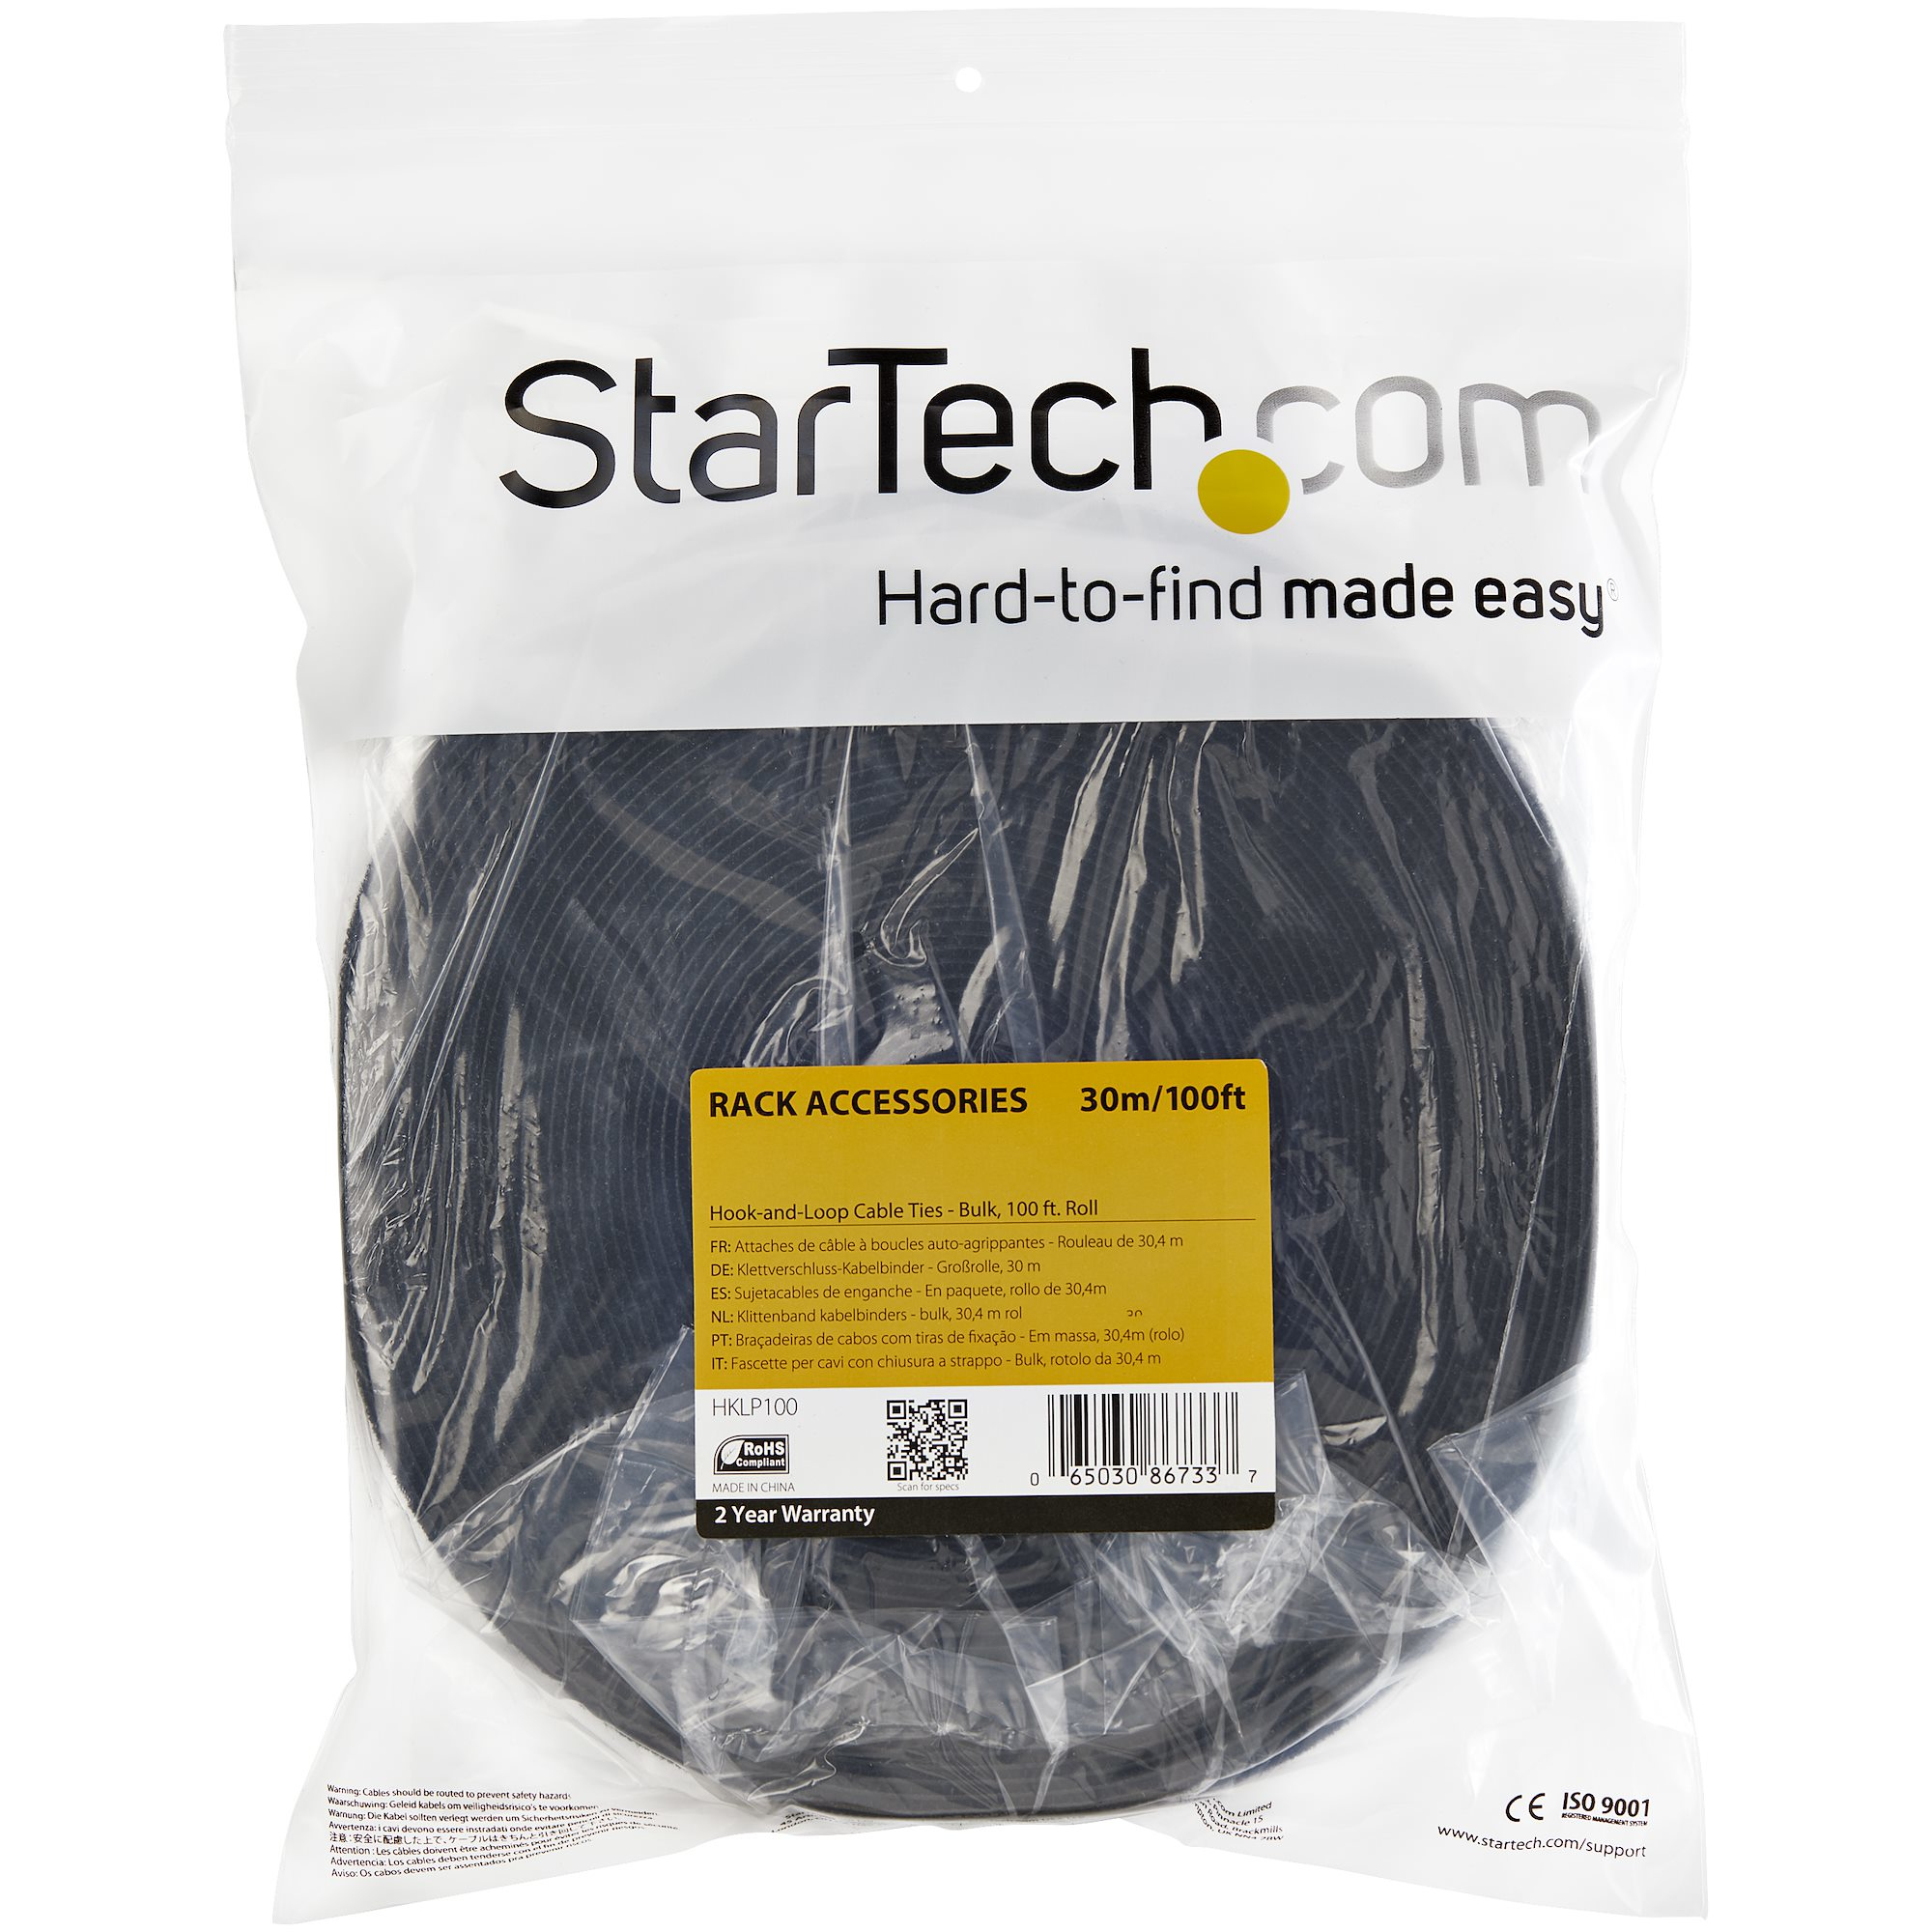 StarTech.com HKLP100 cable tie Hook & loop cable tie Nylon Black 1